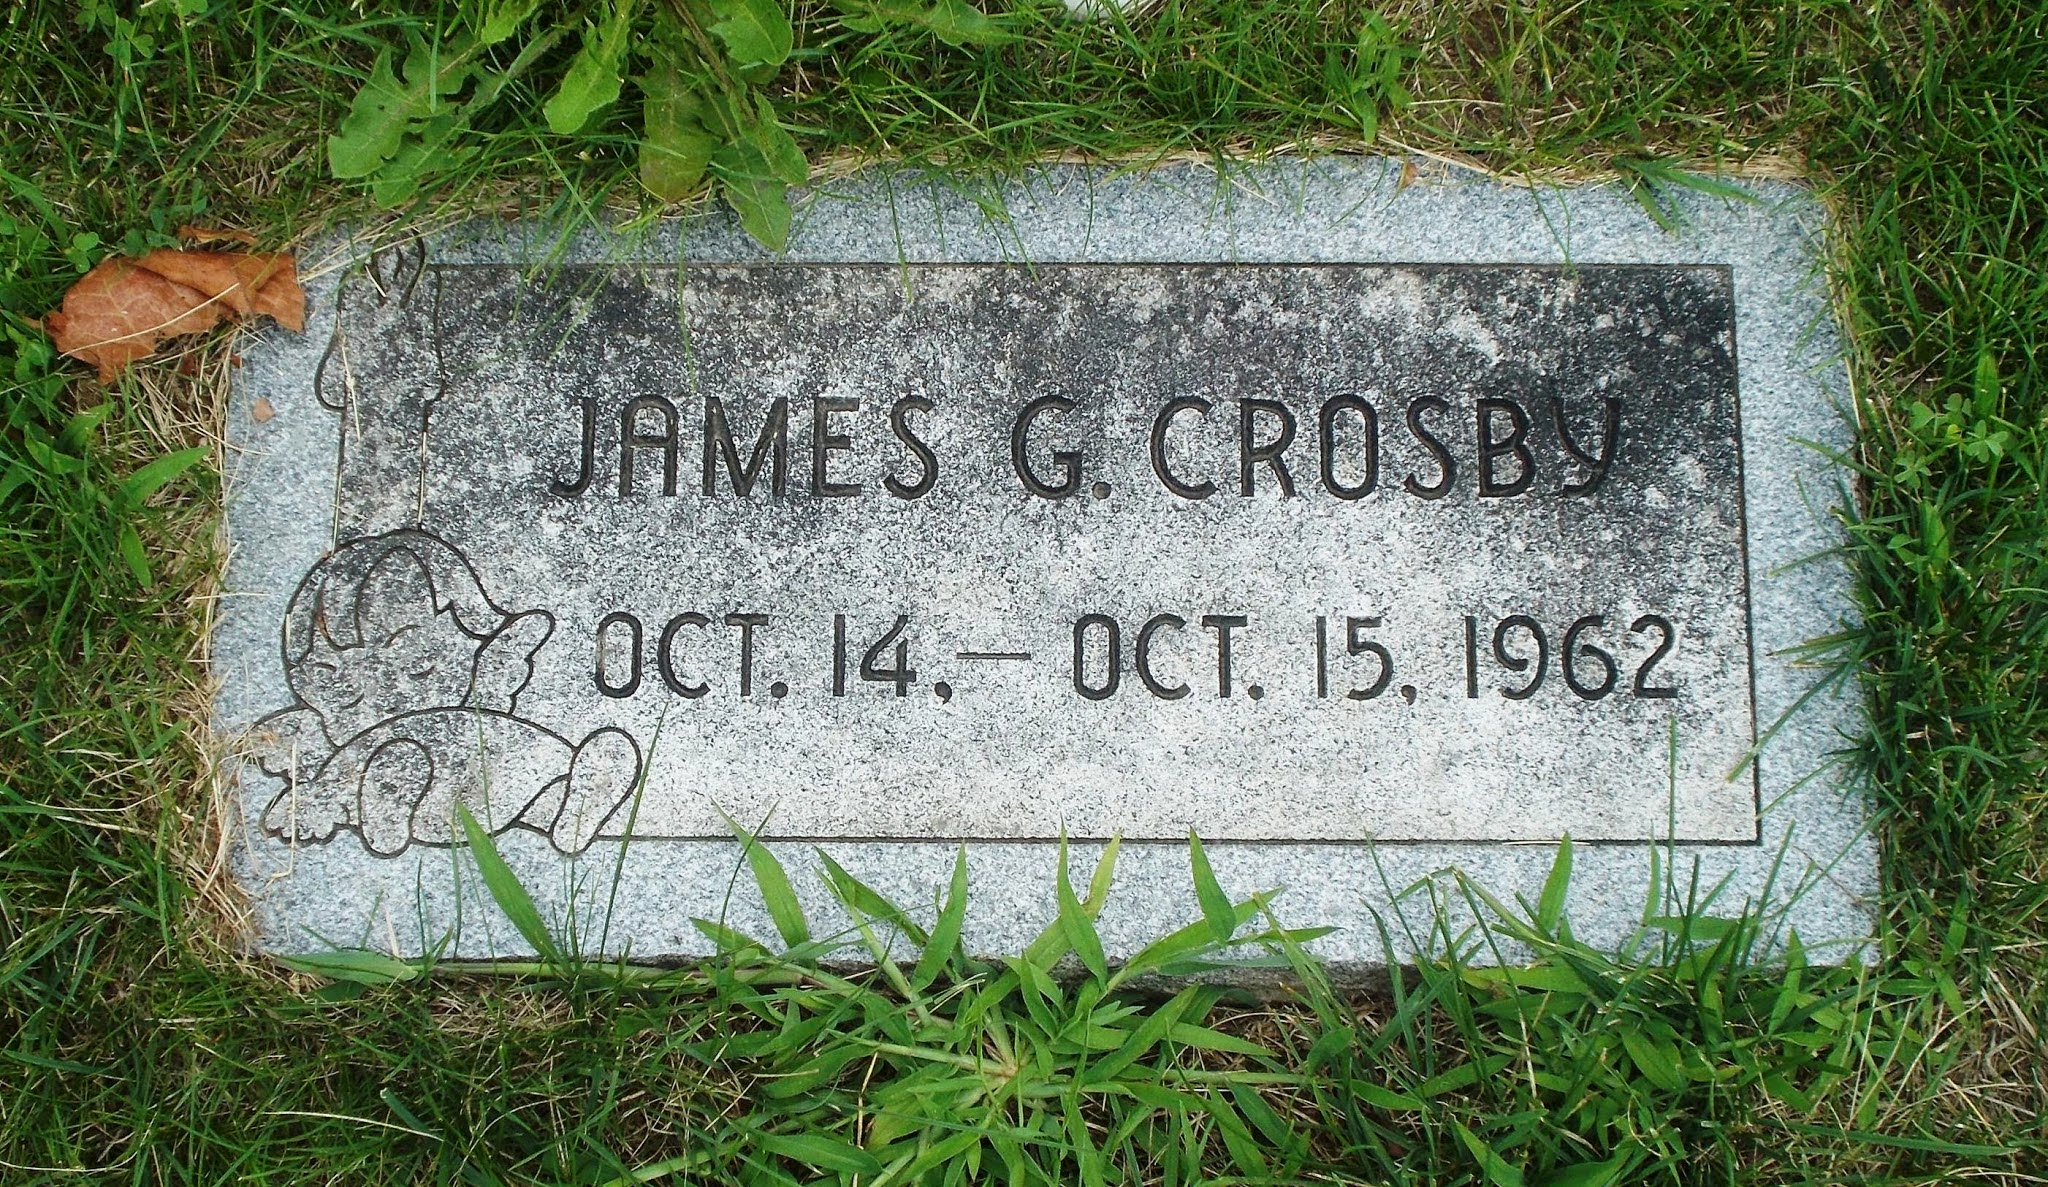 James G Crosby